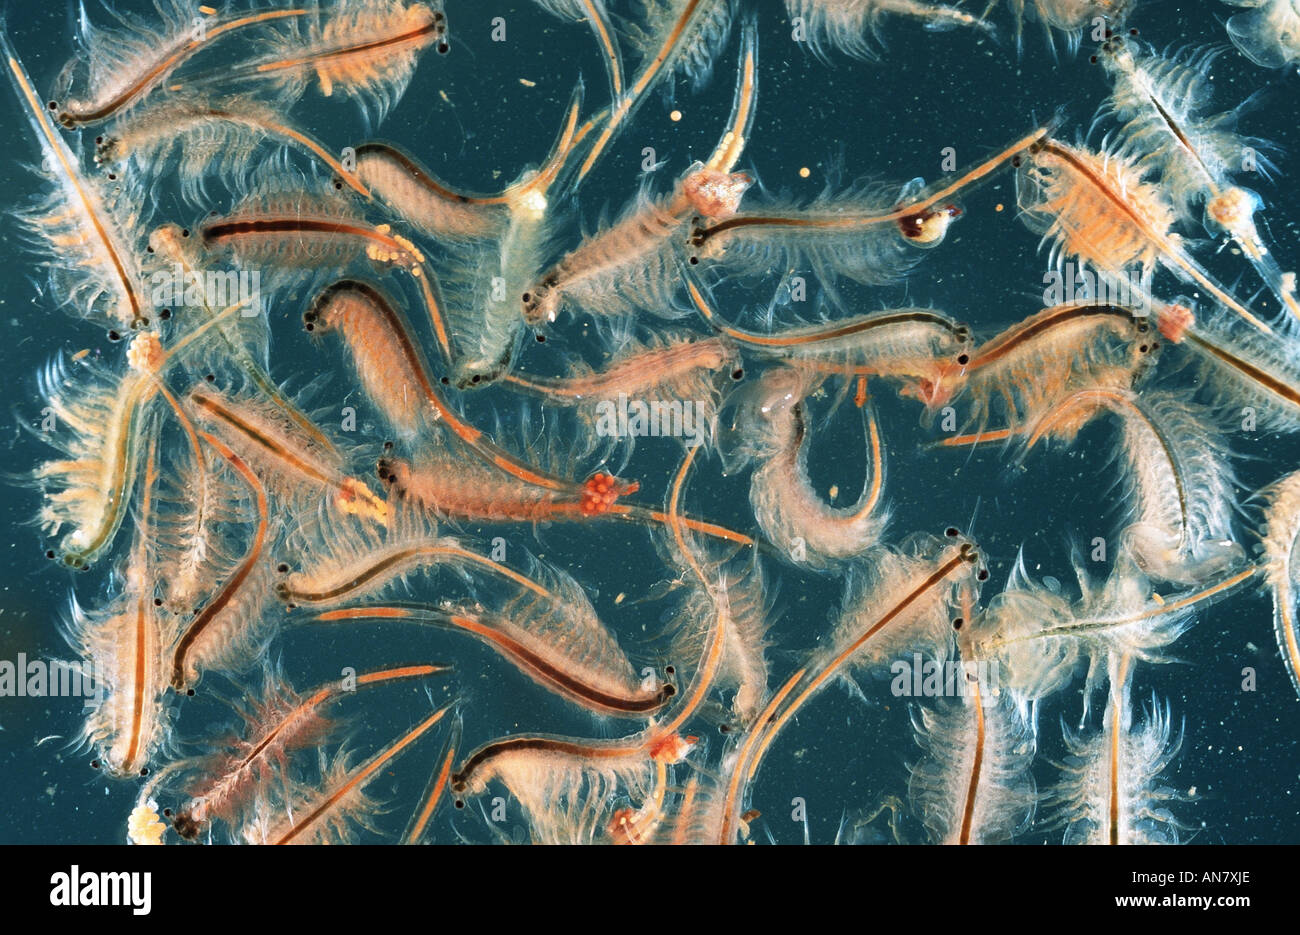 Brine shrimp artemia salina hi-res stock photography and images